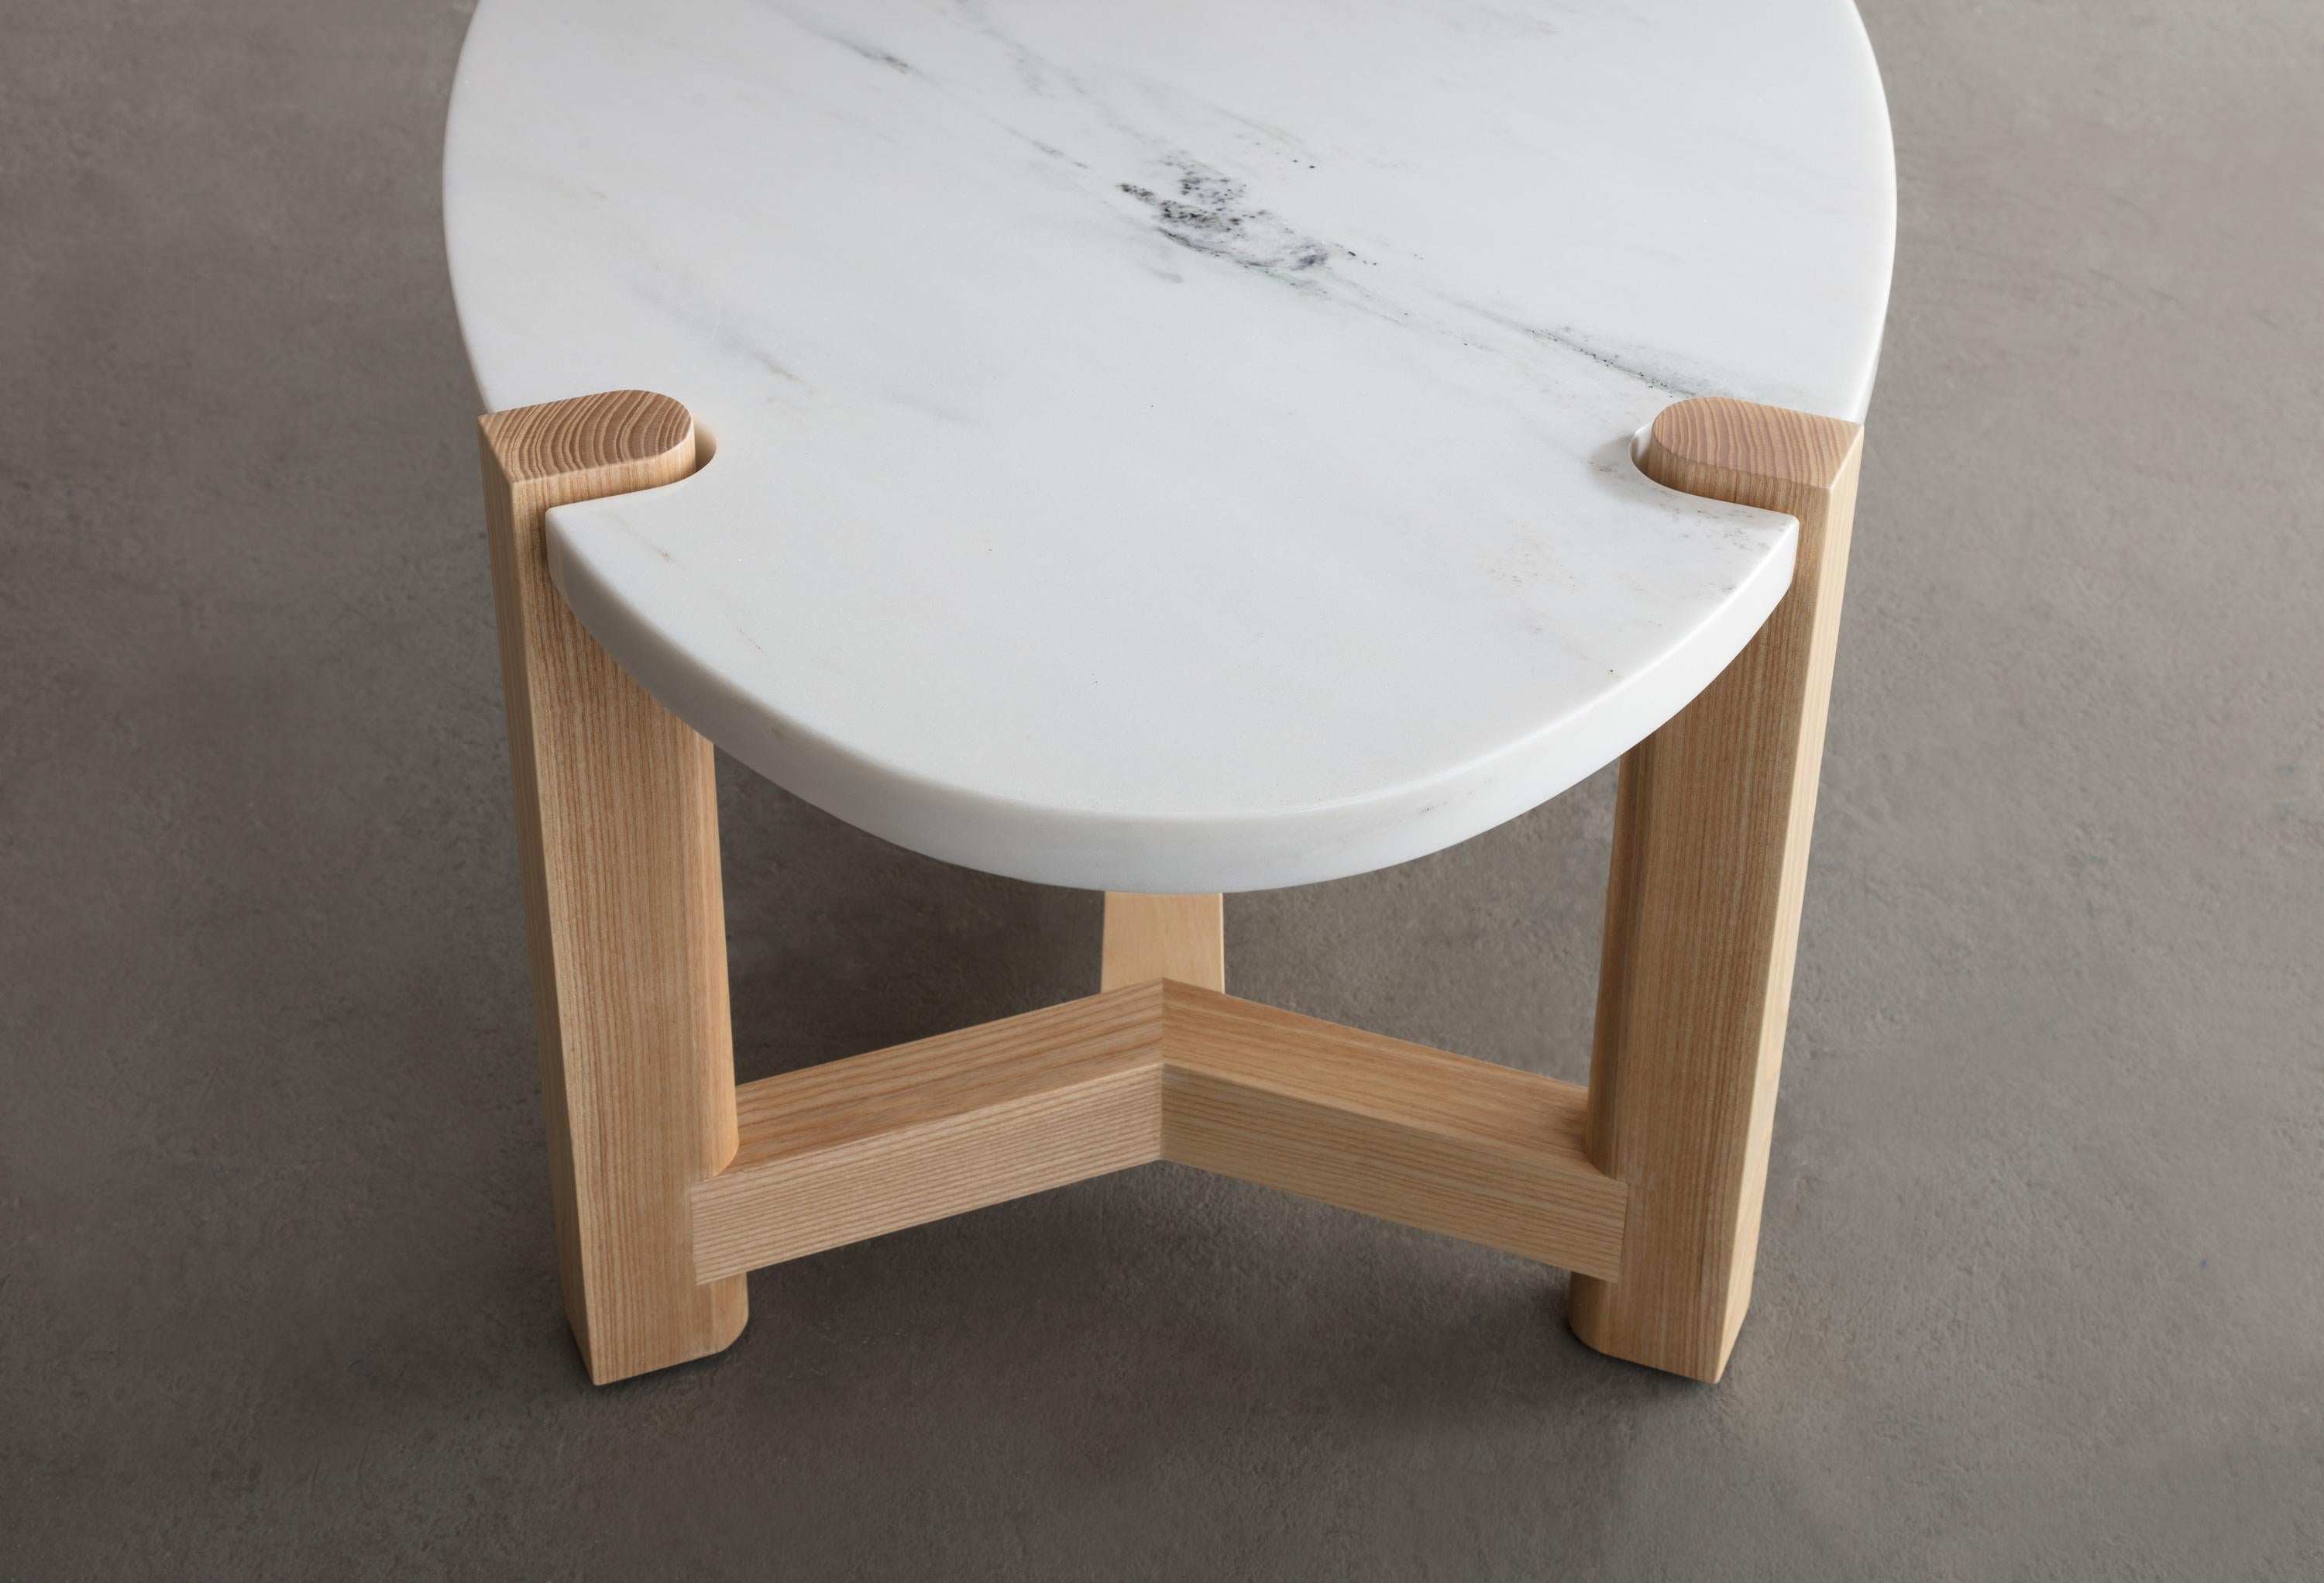 Pierce Coffee Table, Walnut, Carrara Marble or COS, Oval, Made in USA 3